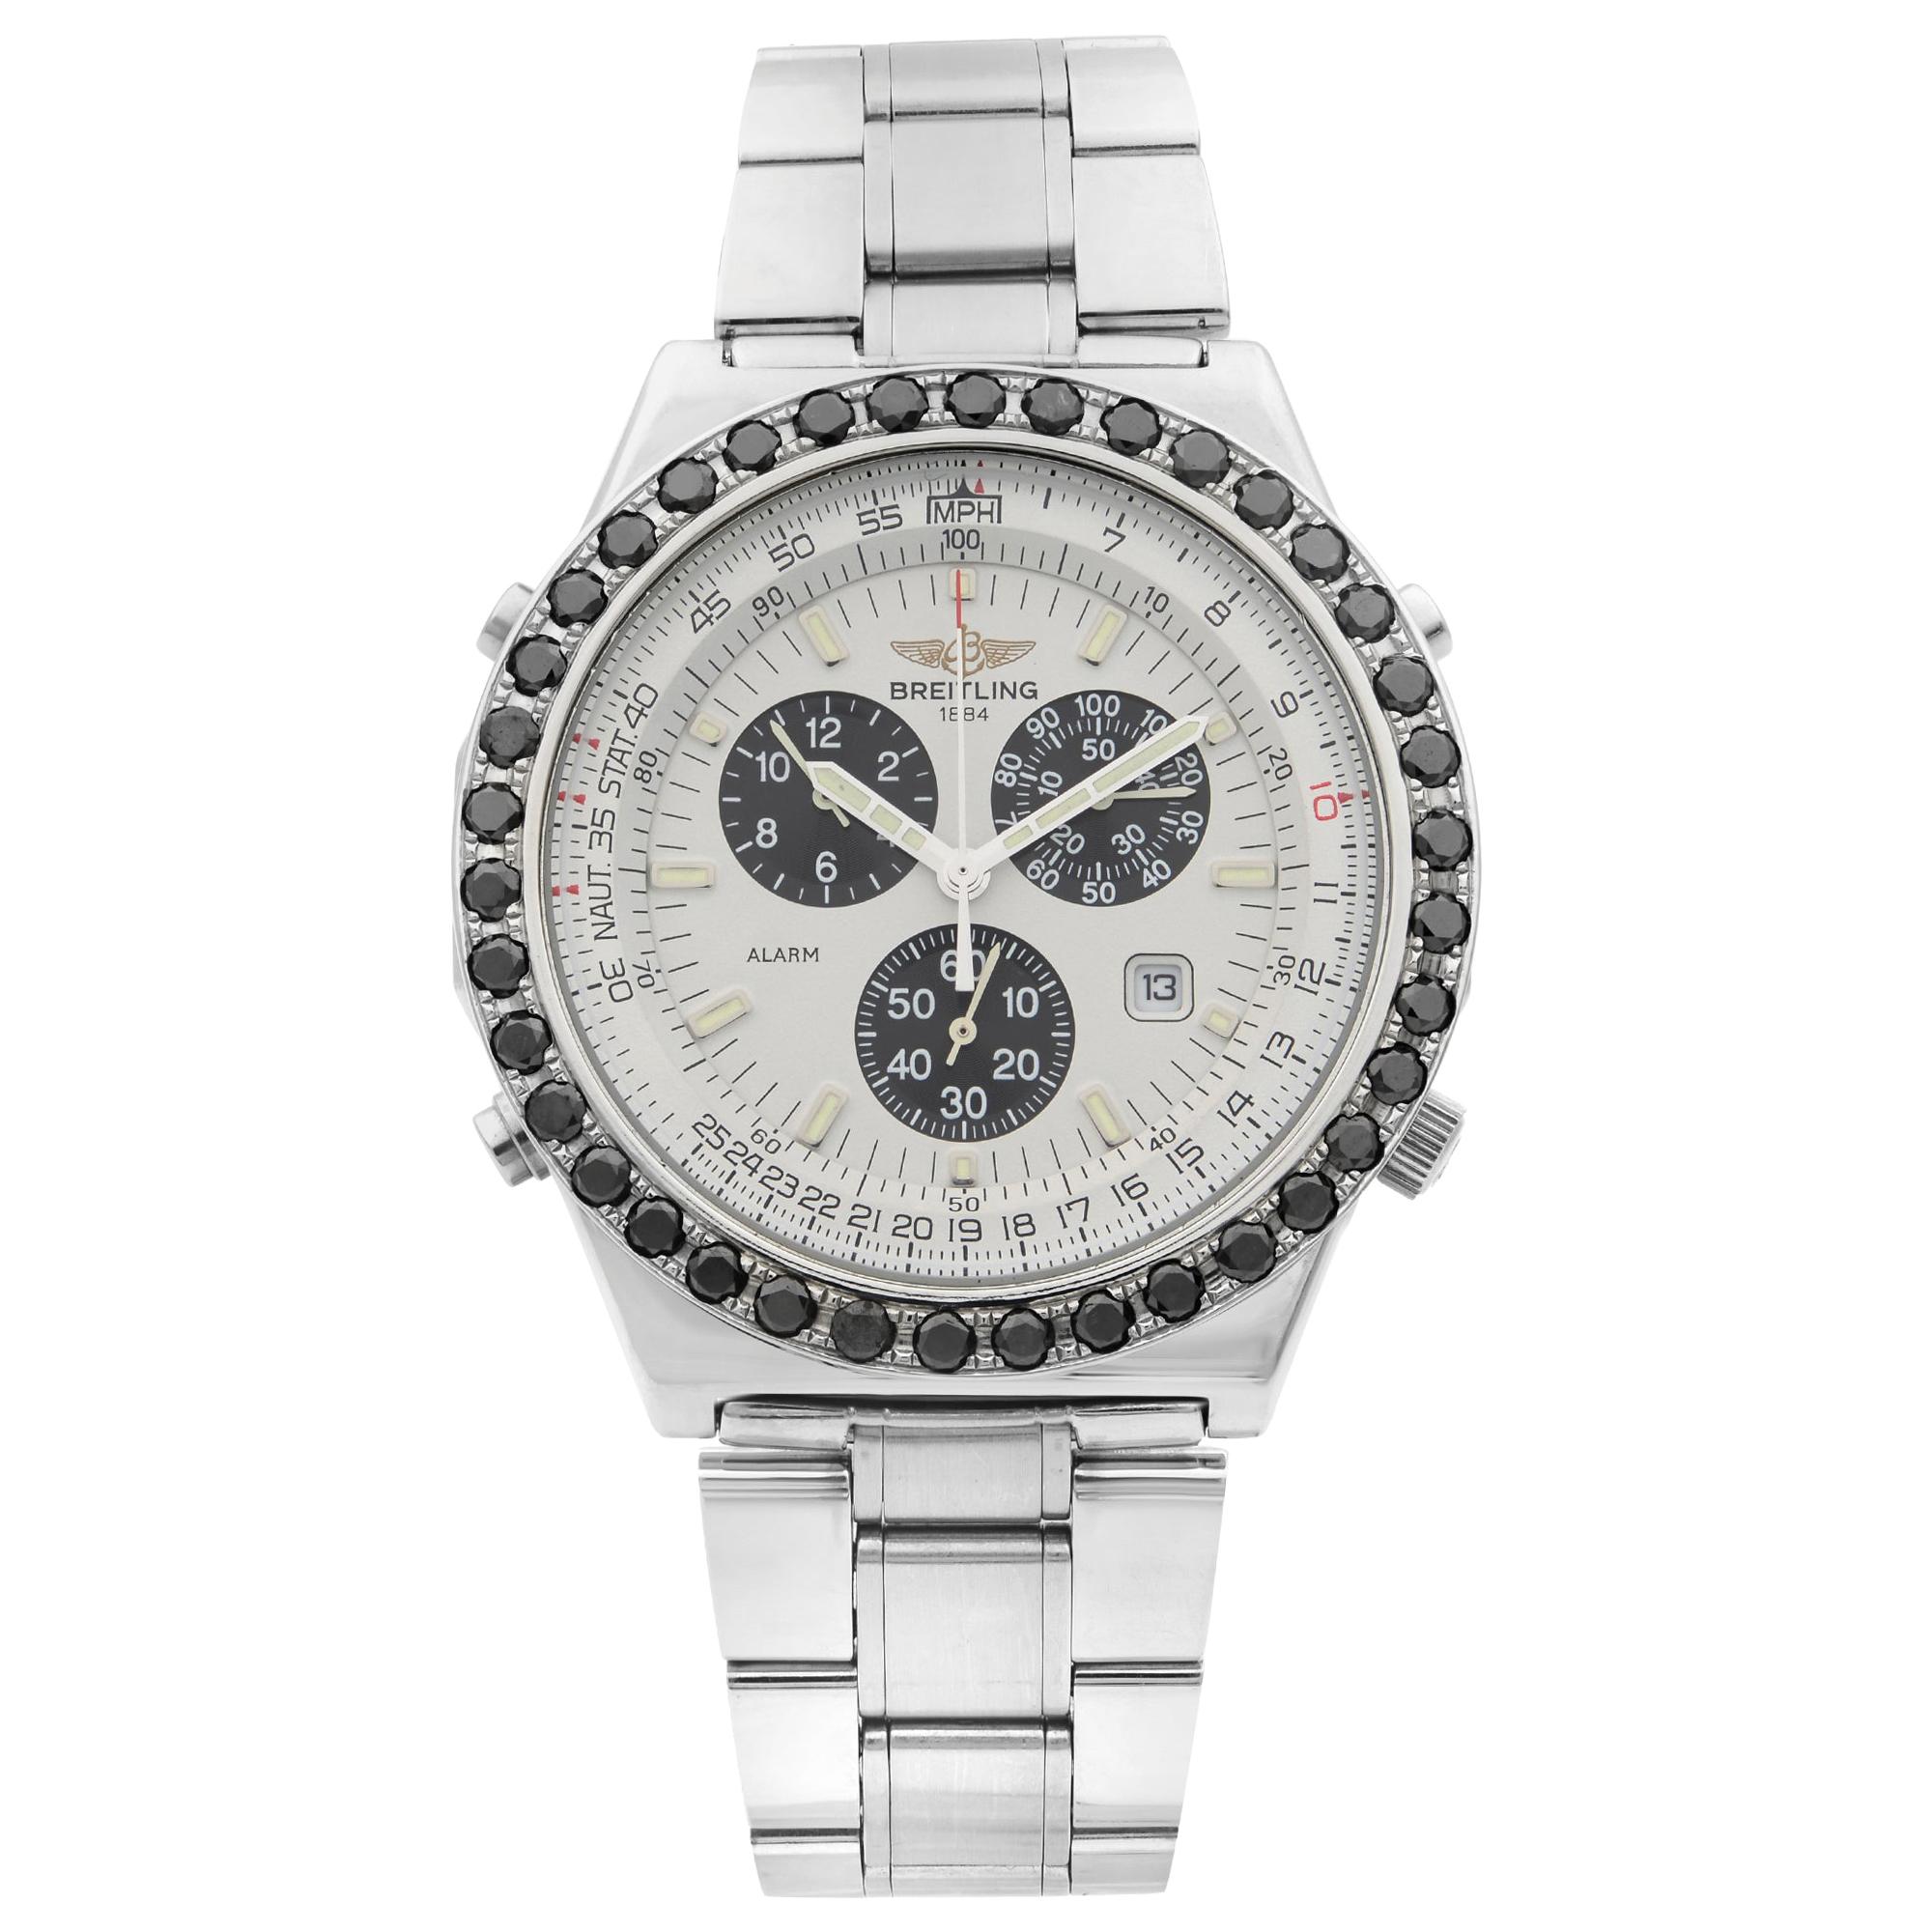 Breitling Jupiter Pilot Steel Diamond White Dial Alarm Quartz Men's Watch A59028